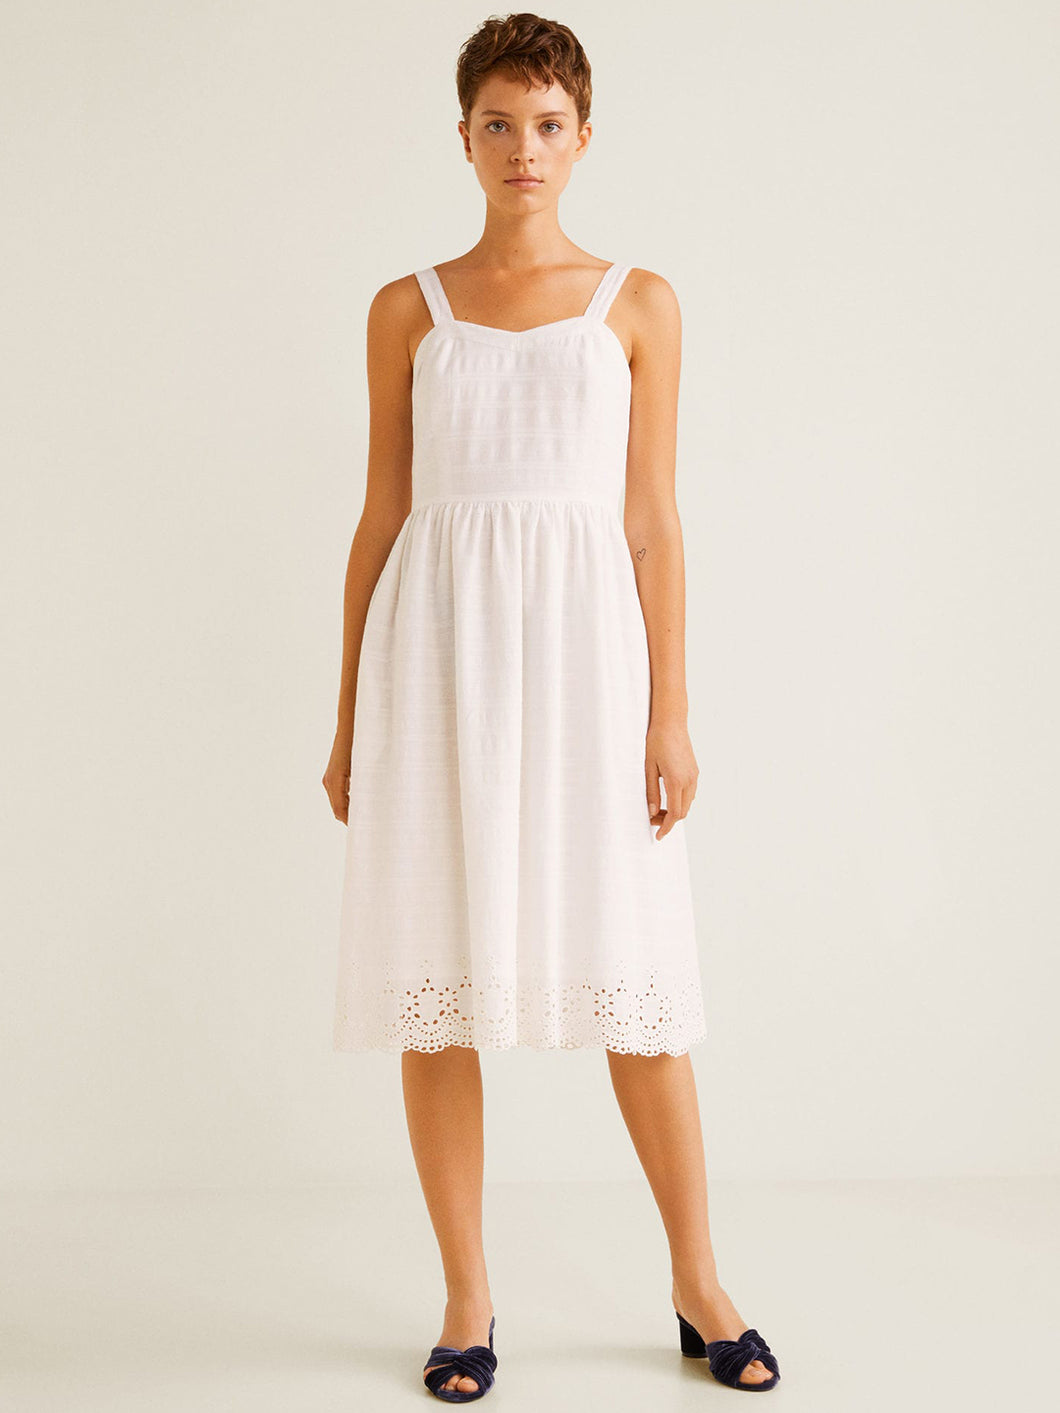 Women White Solid Dress